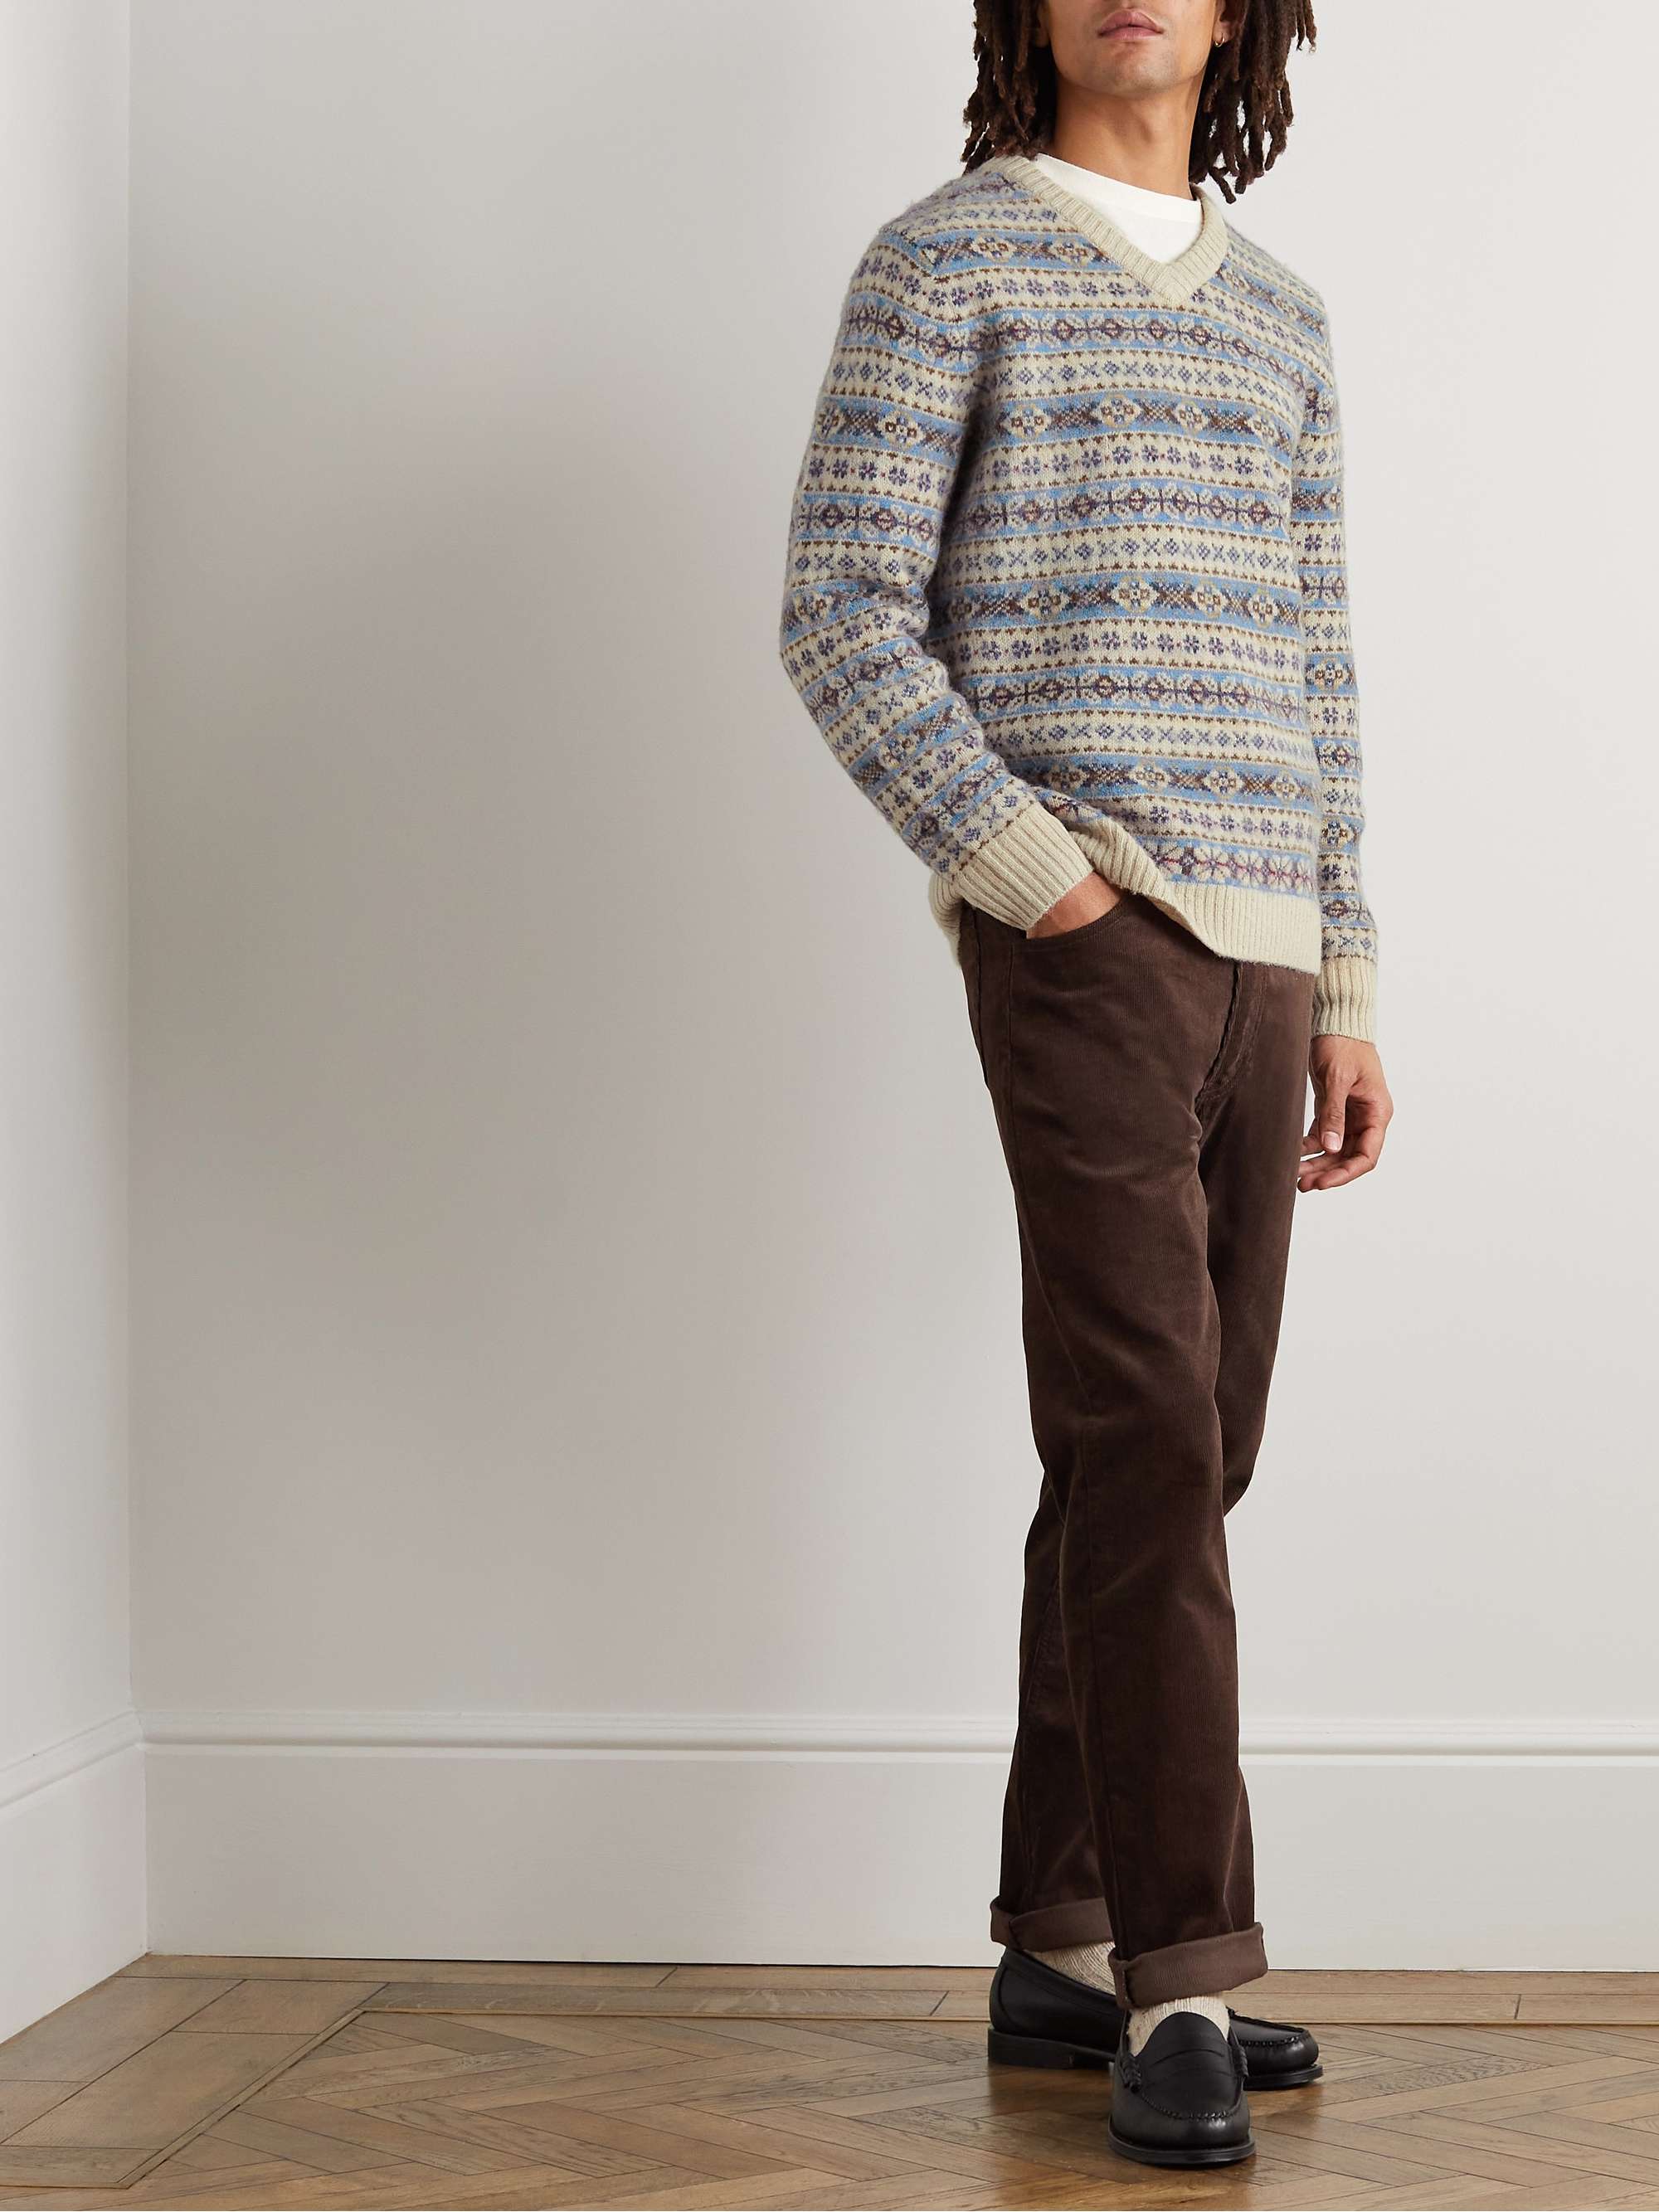 J.CREW Paul Fair Isle Brushed Wool Sweater for Men | MR PORTER